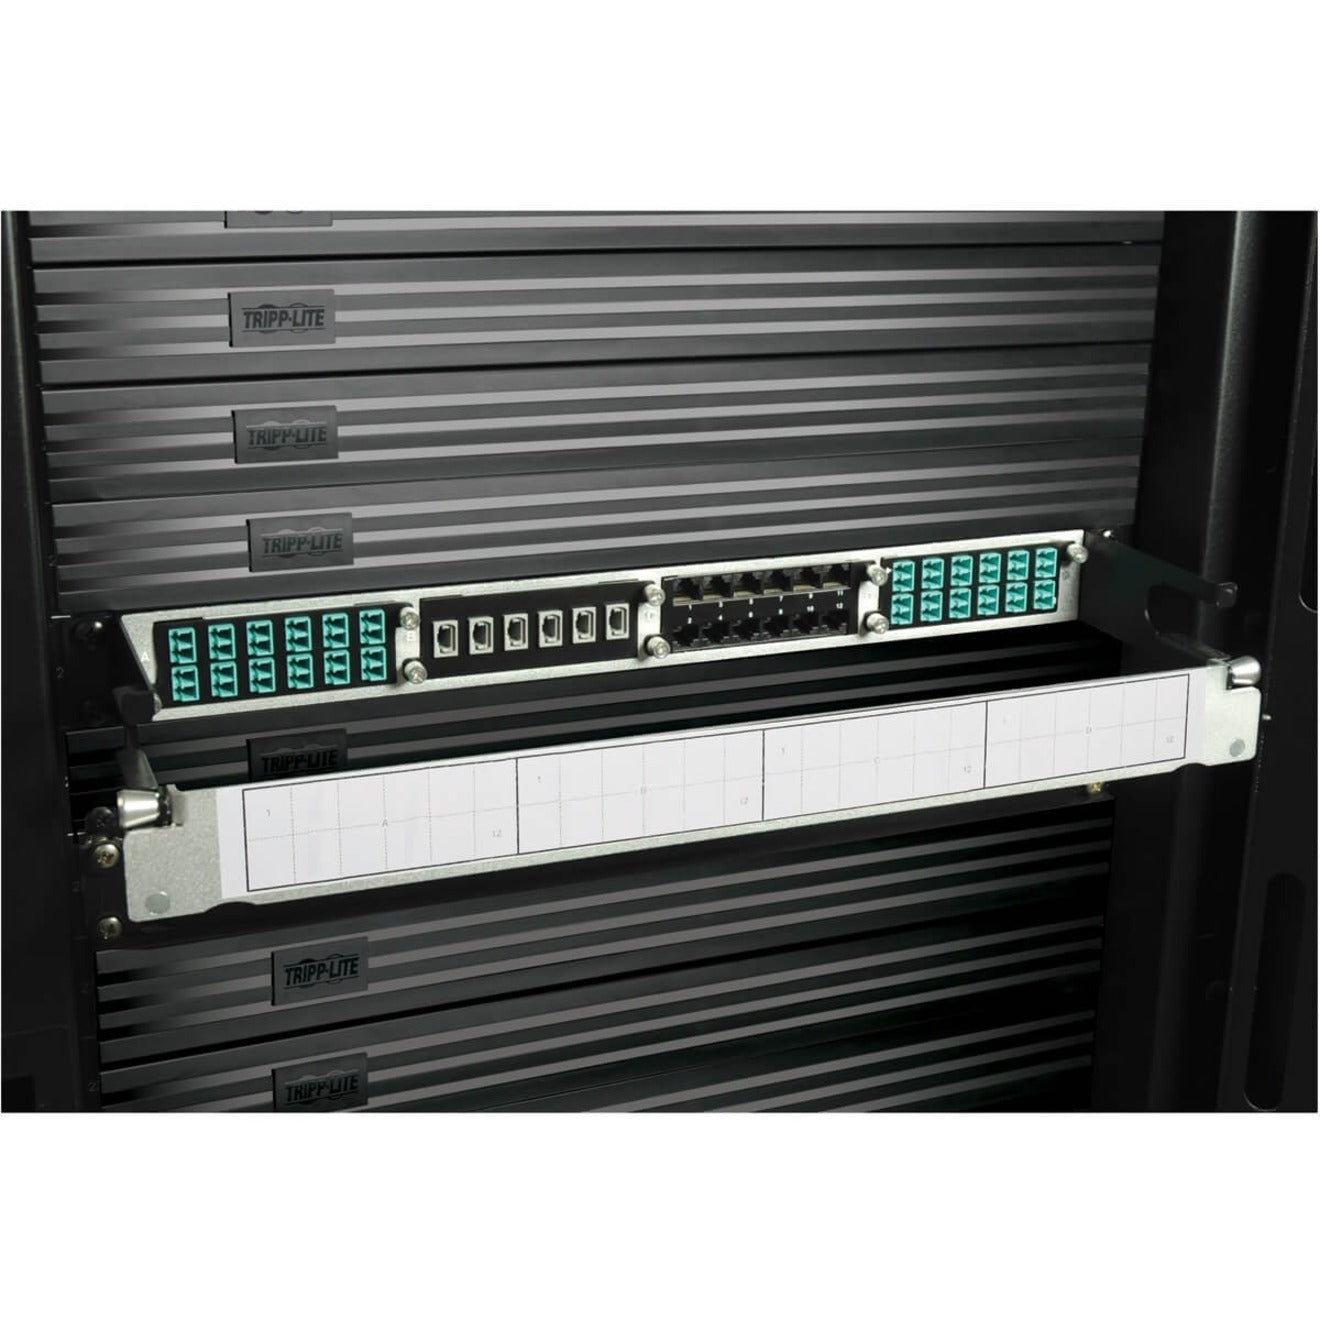 Tripp Lite N484-12LC 10GbE Pass-Through Cassette - (x12) LC Duplex, Network Patch Panel